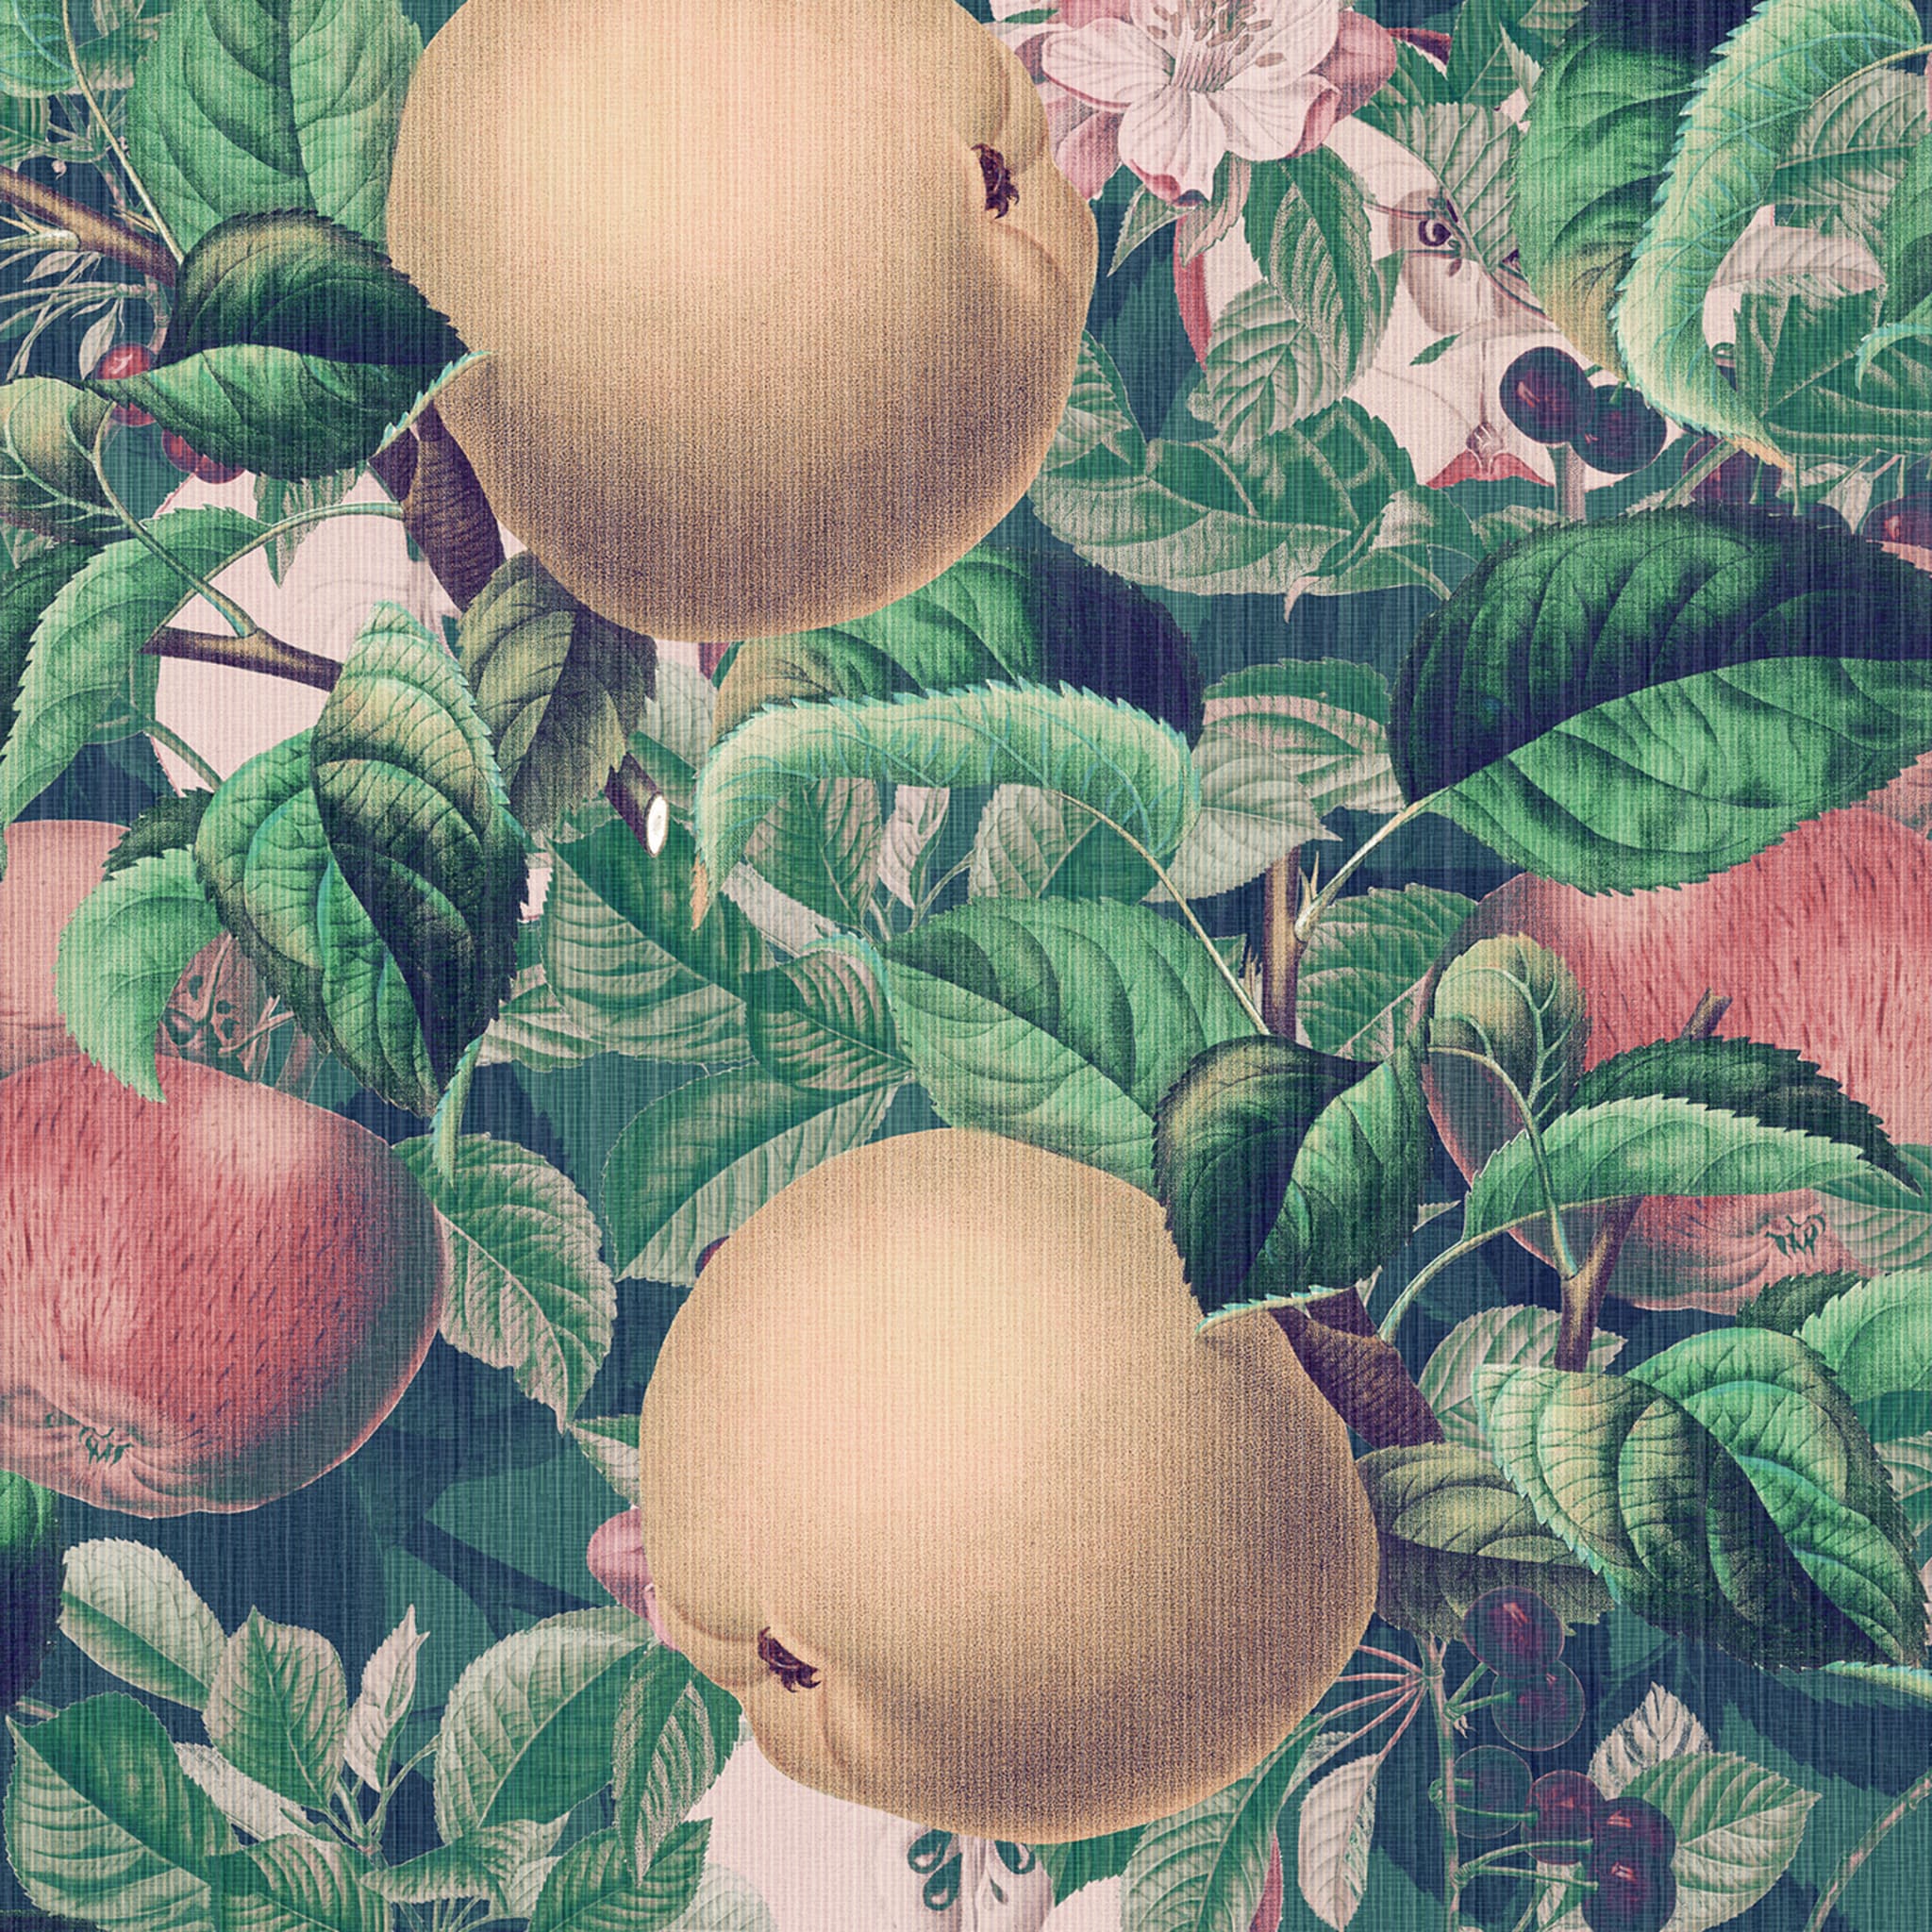 Giant Apple Wallpaper by Vzn Studio #2 - Alternative view 1